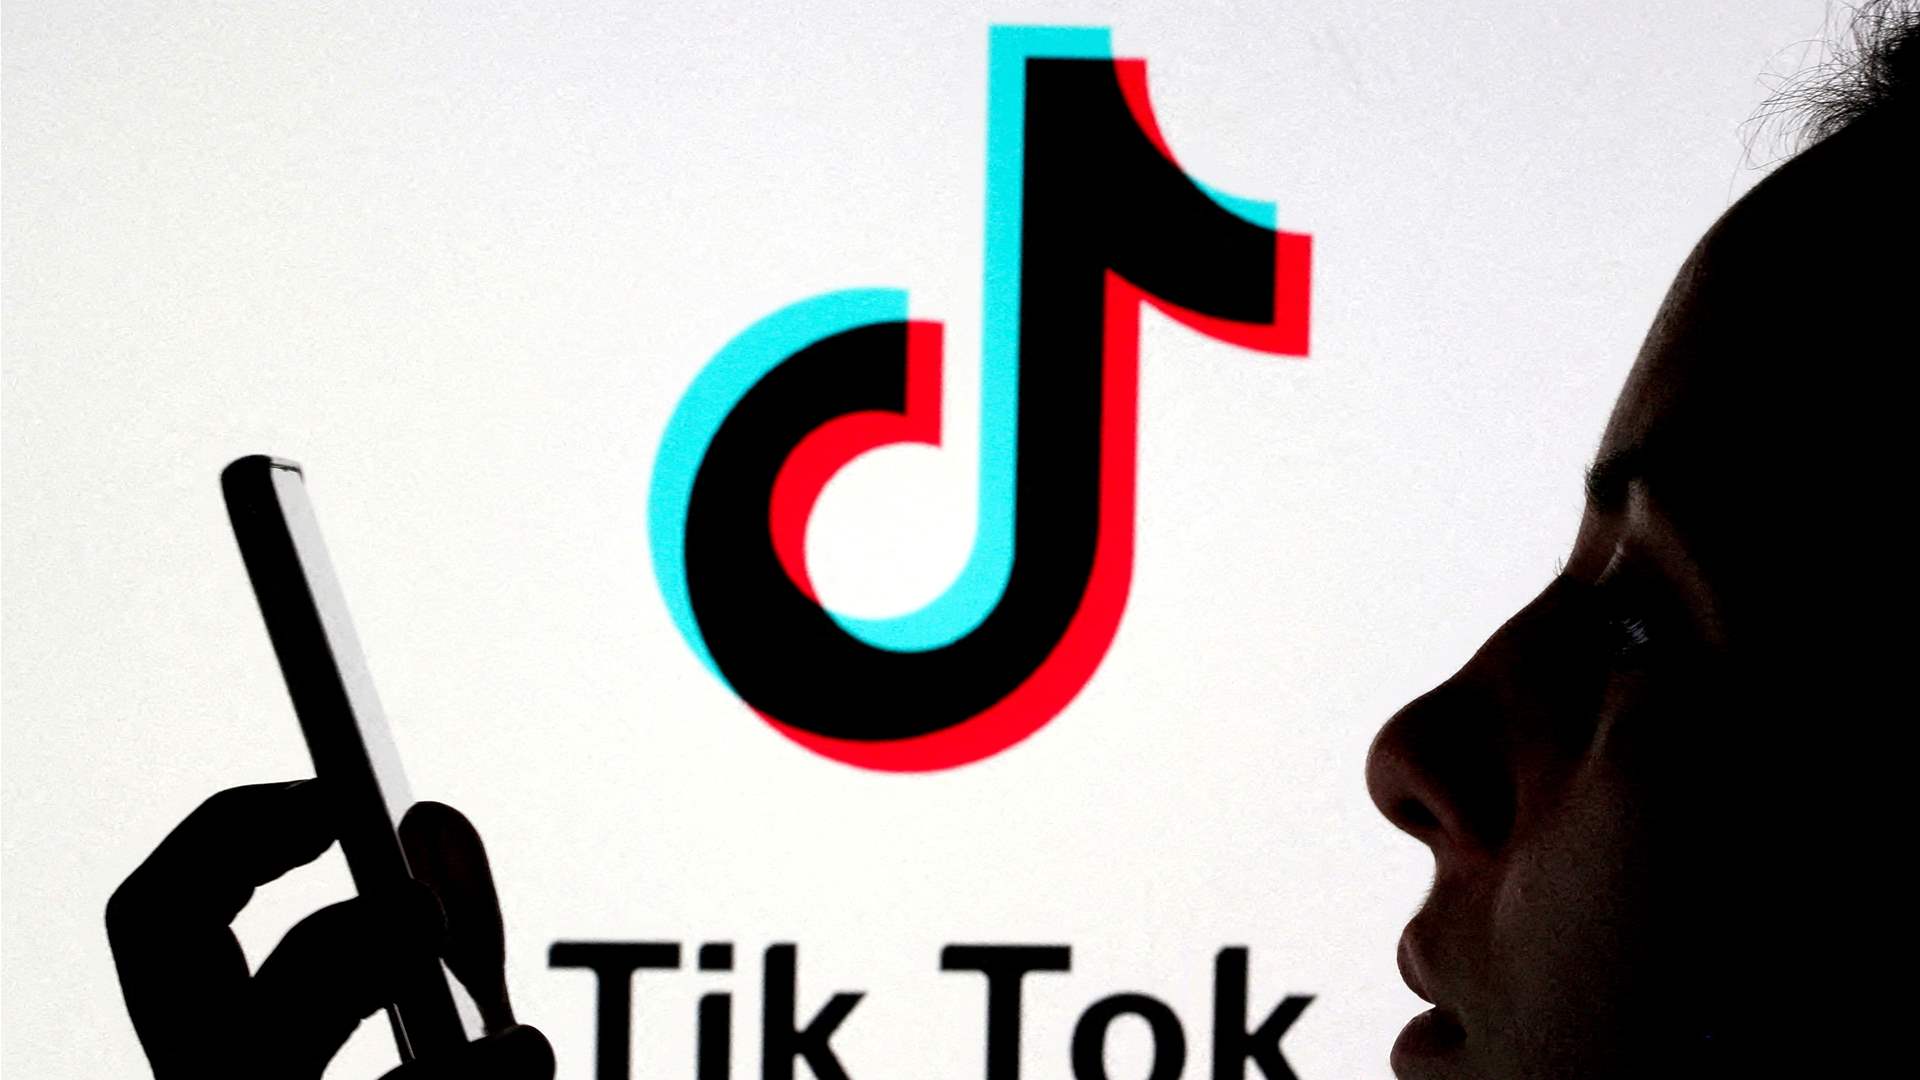 China says US presumption of guilt against TikTok is baseless